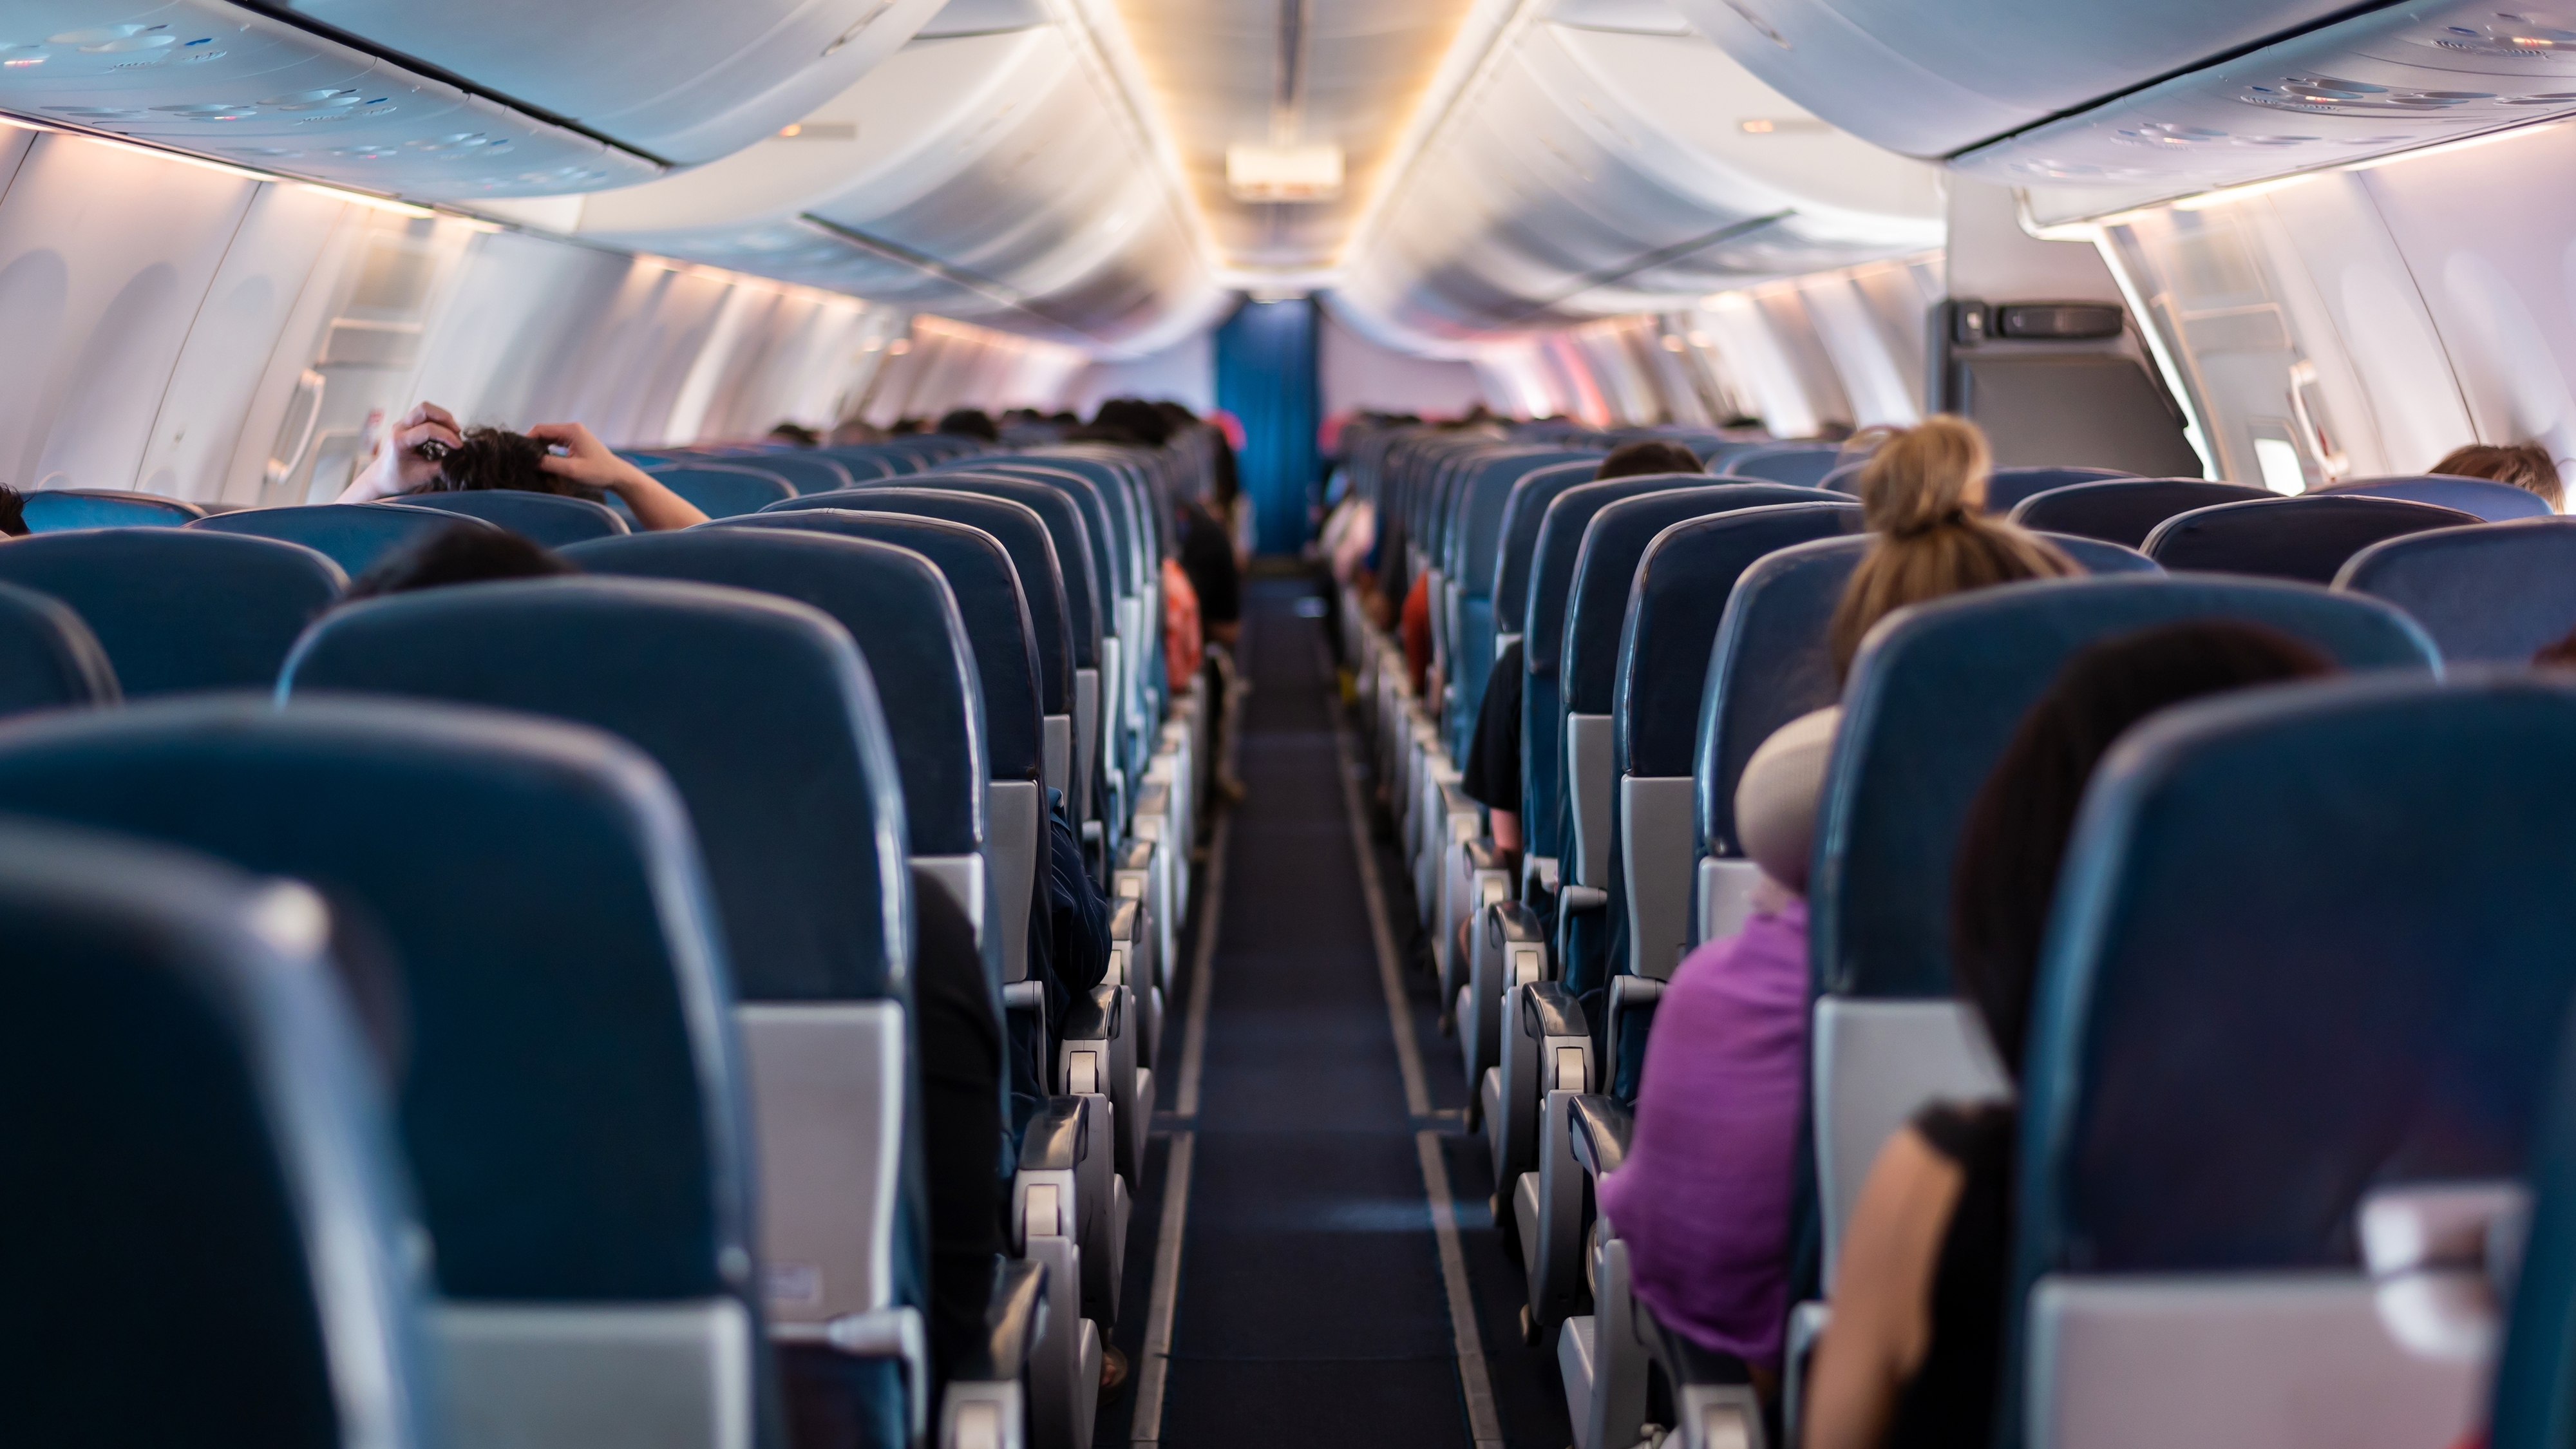 Flugzeugsitze | Quelle: Shutterstock